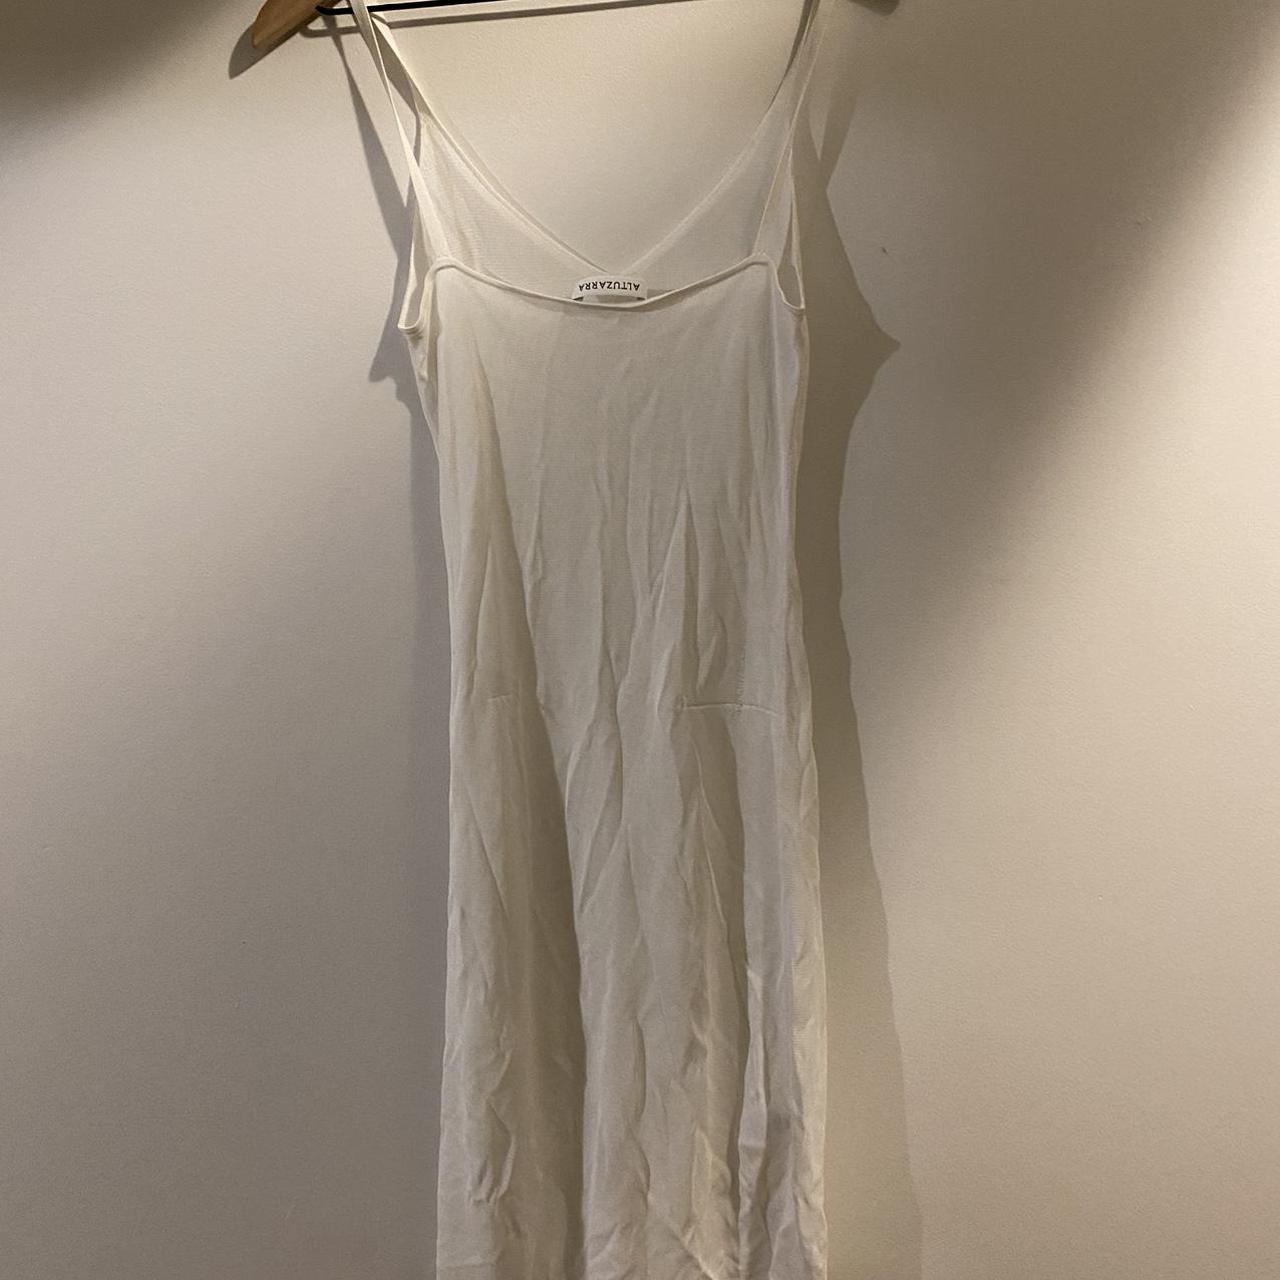 Altuzarra Women's White and Cream Dress (3)